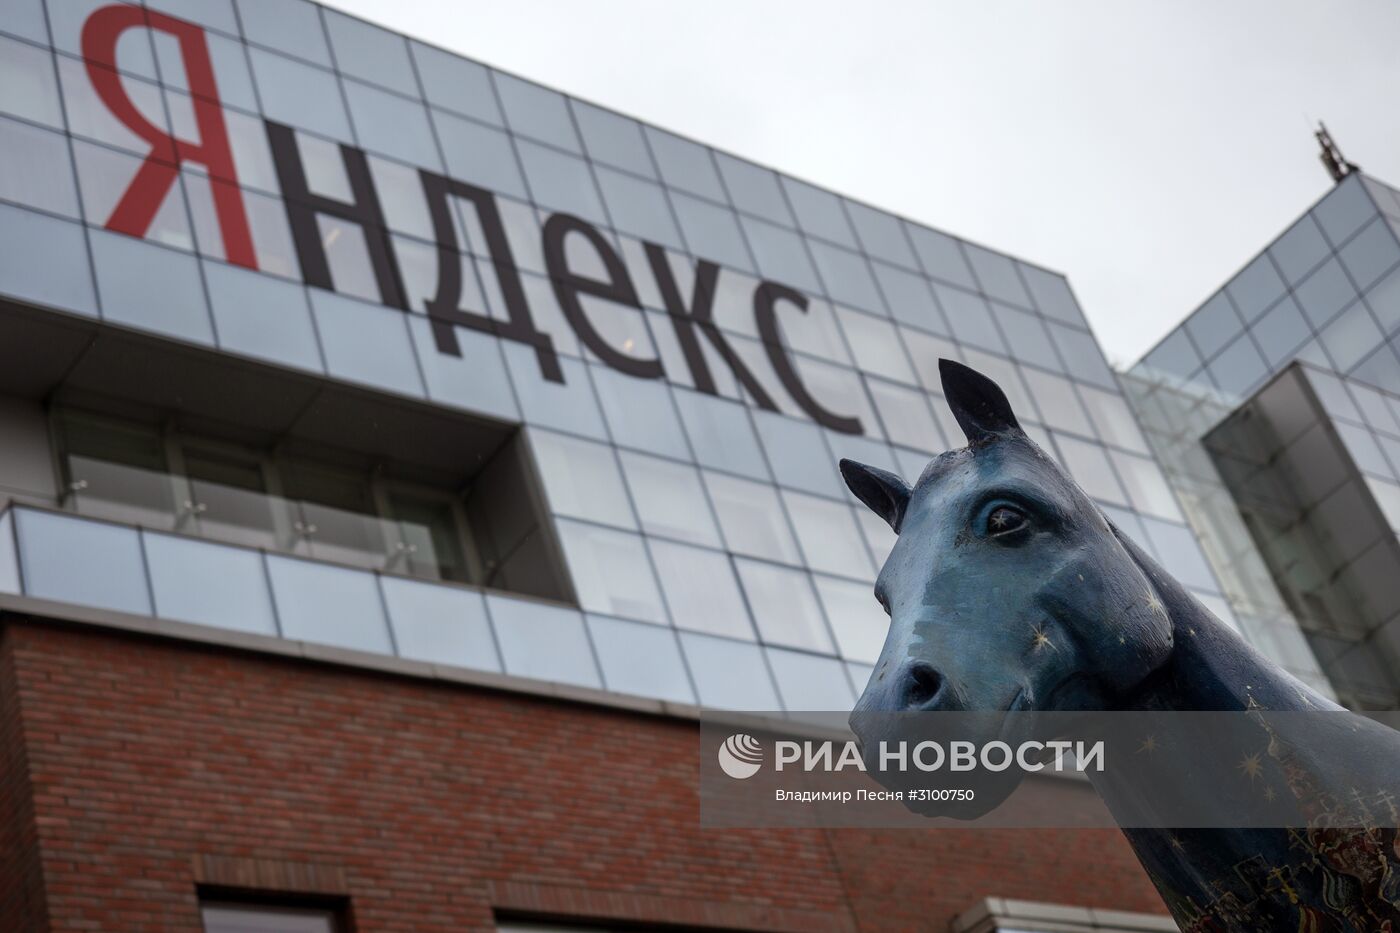 Офис компании "Яндекс"